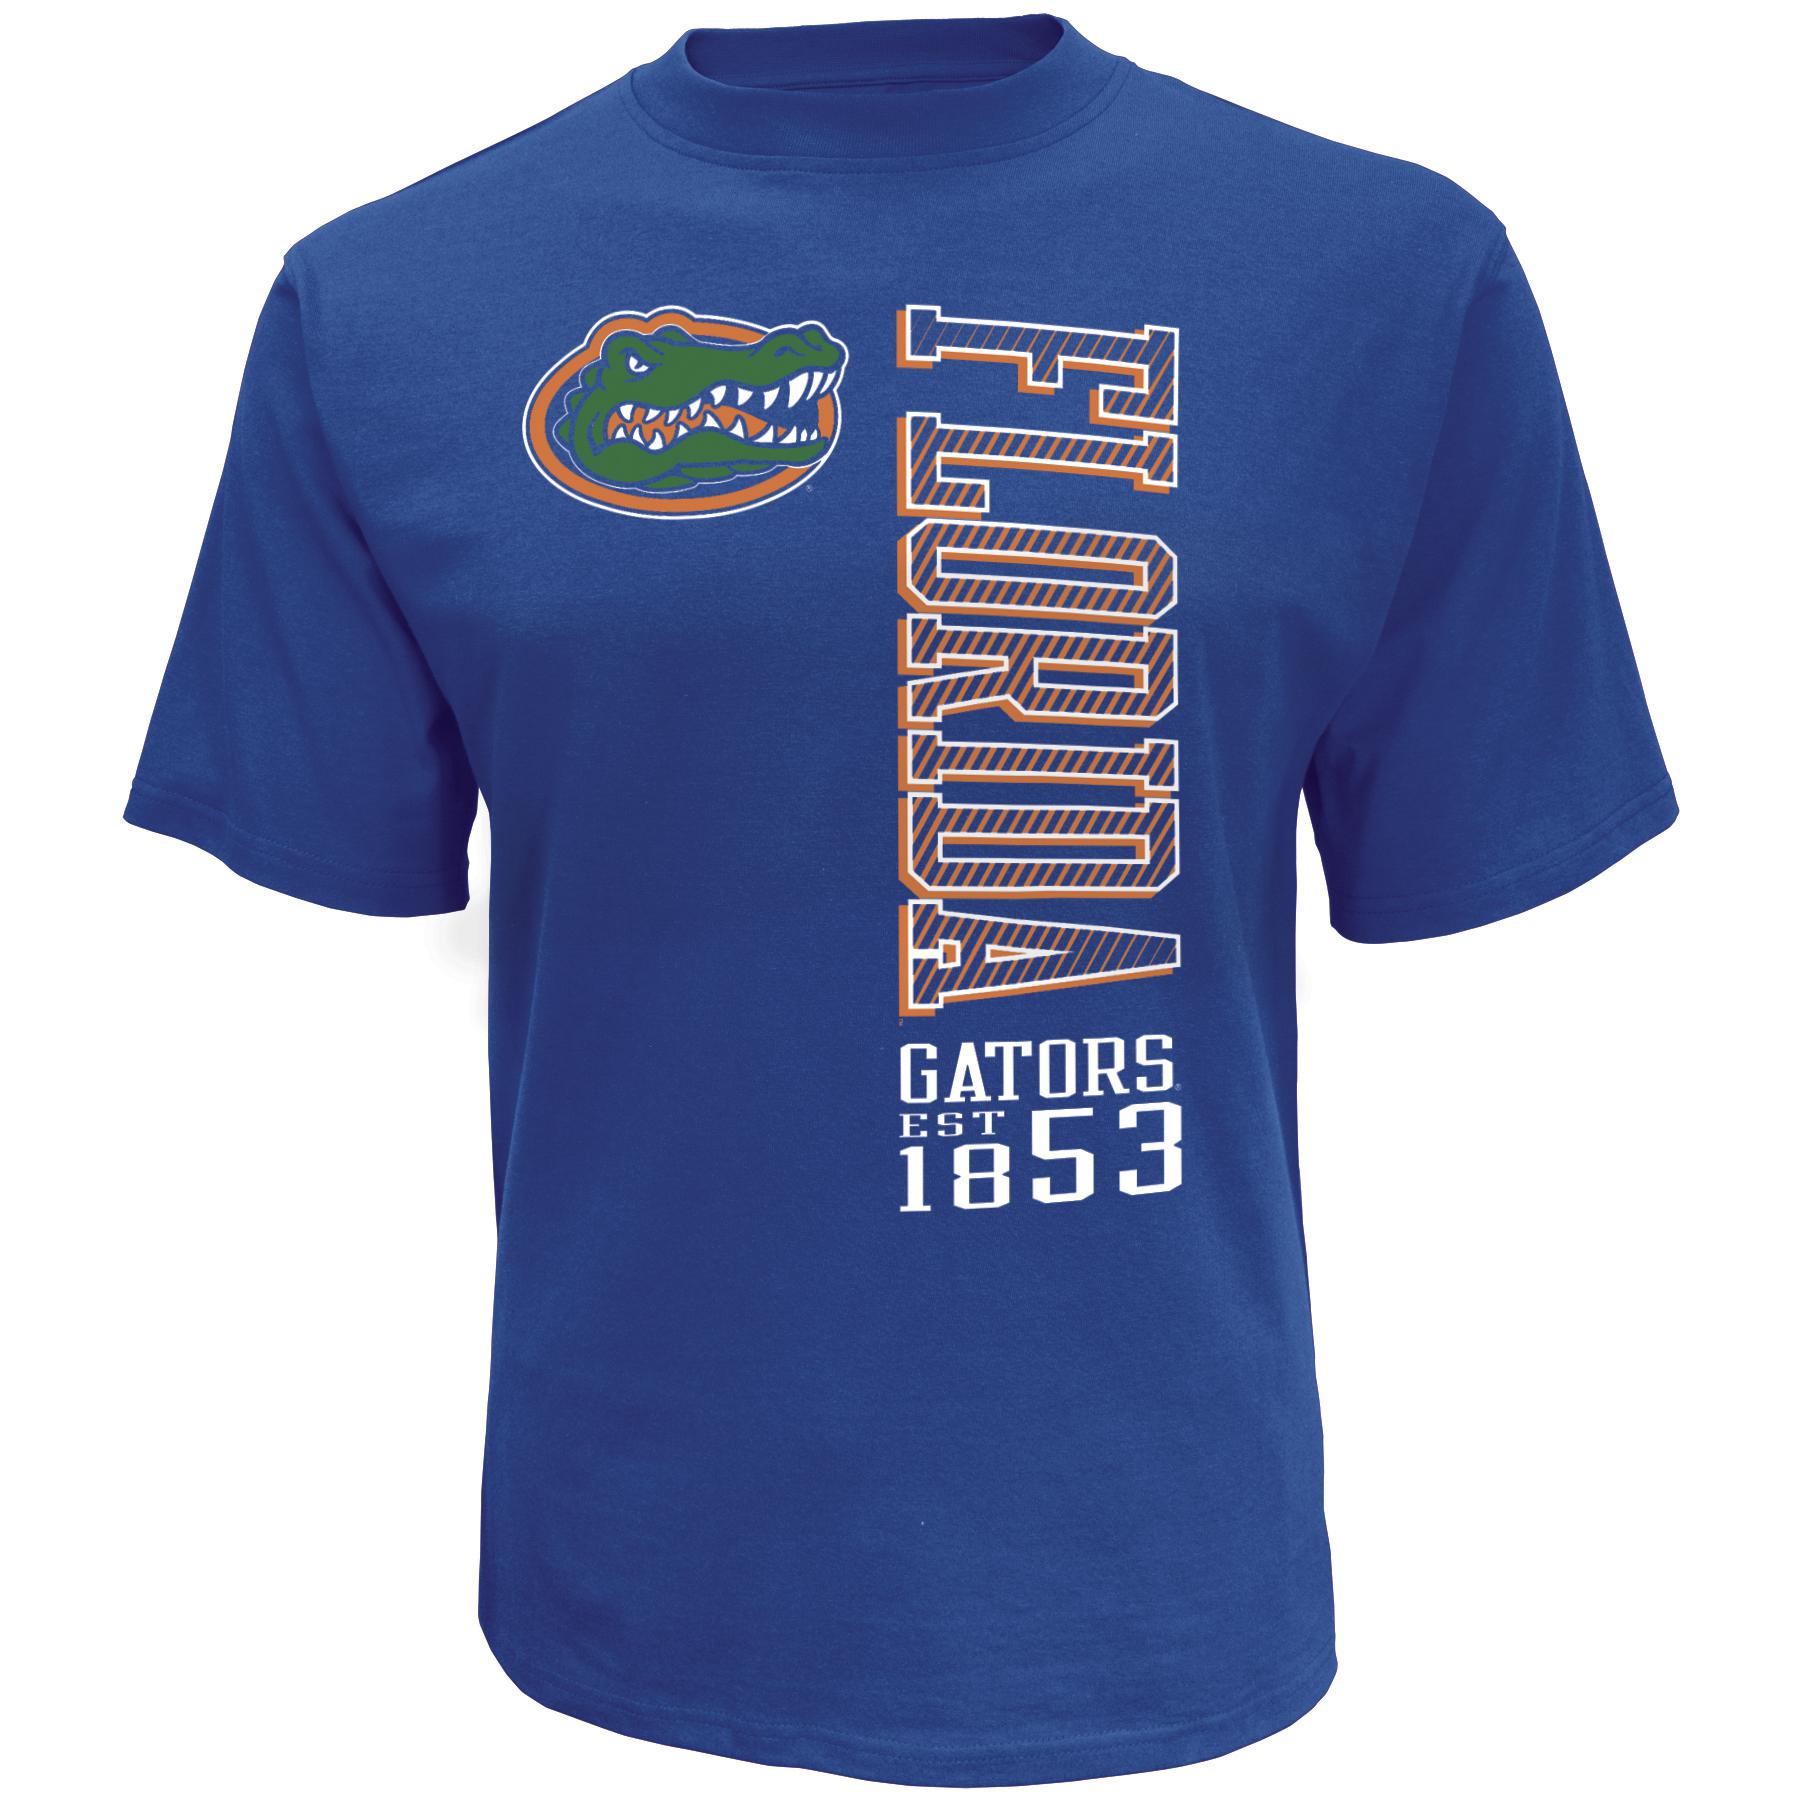 NCAA Men's Big & Tall Graphic T-Shirt - Florida Gators